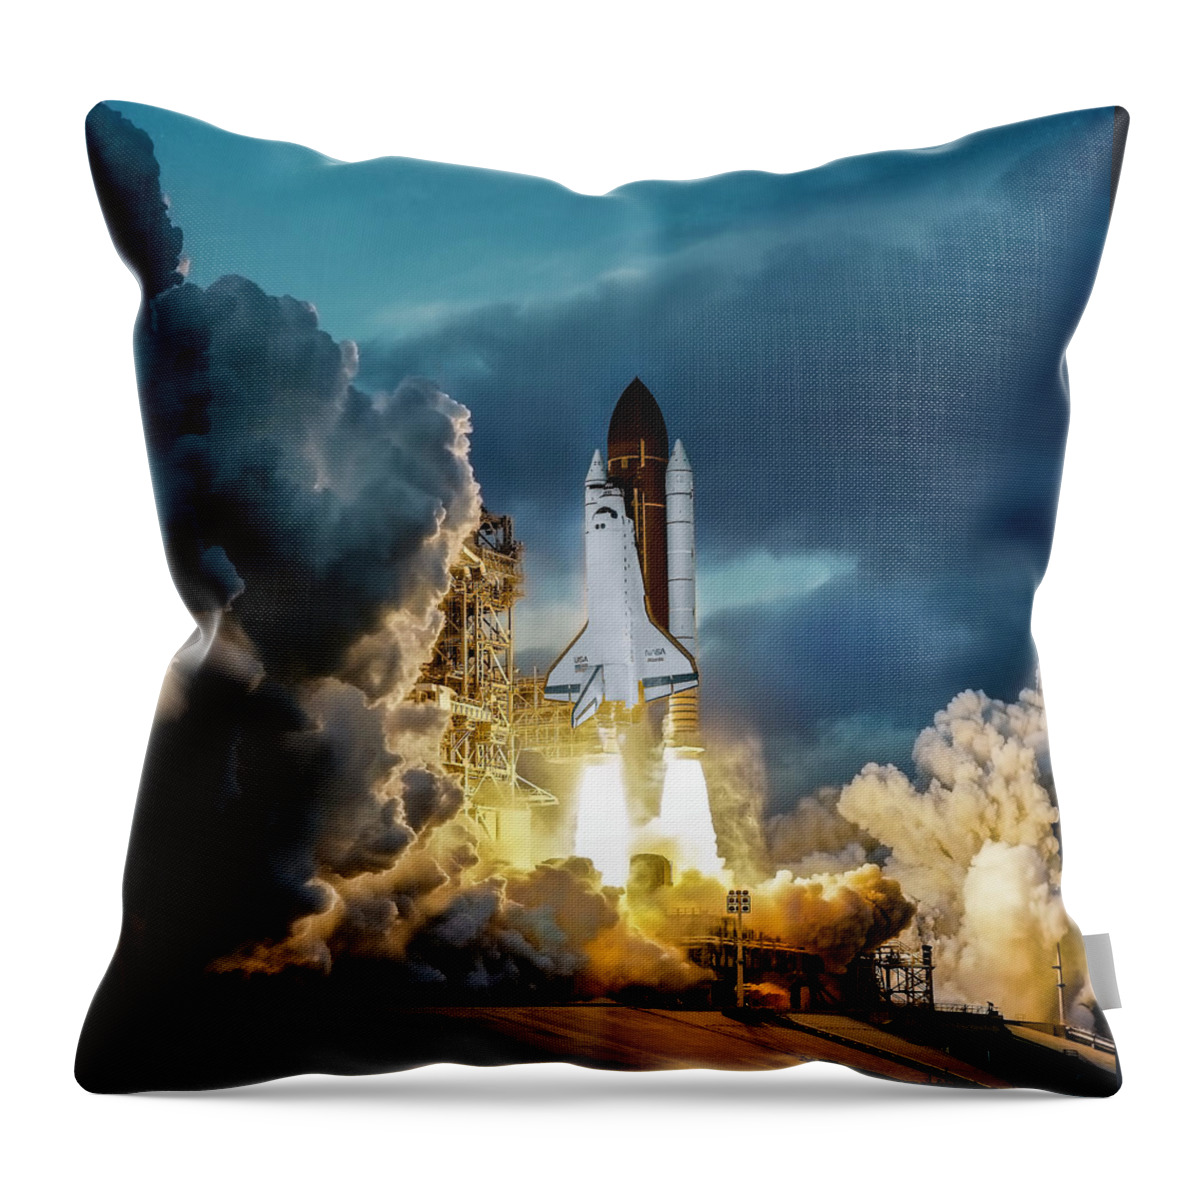 Space Shuttle Atlantis Throw Pillow featuring the photograph Space Shuttle Atlantis by Carlos Diaz